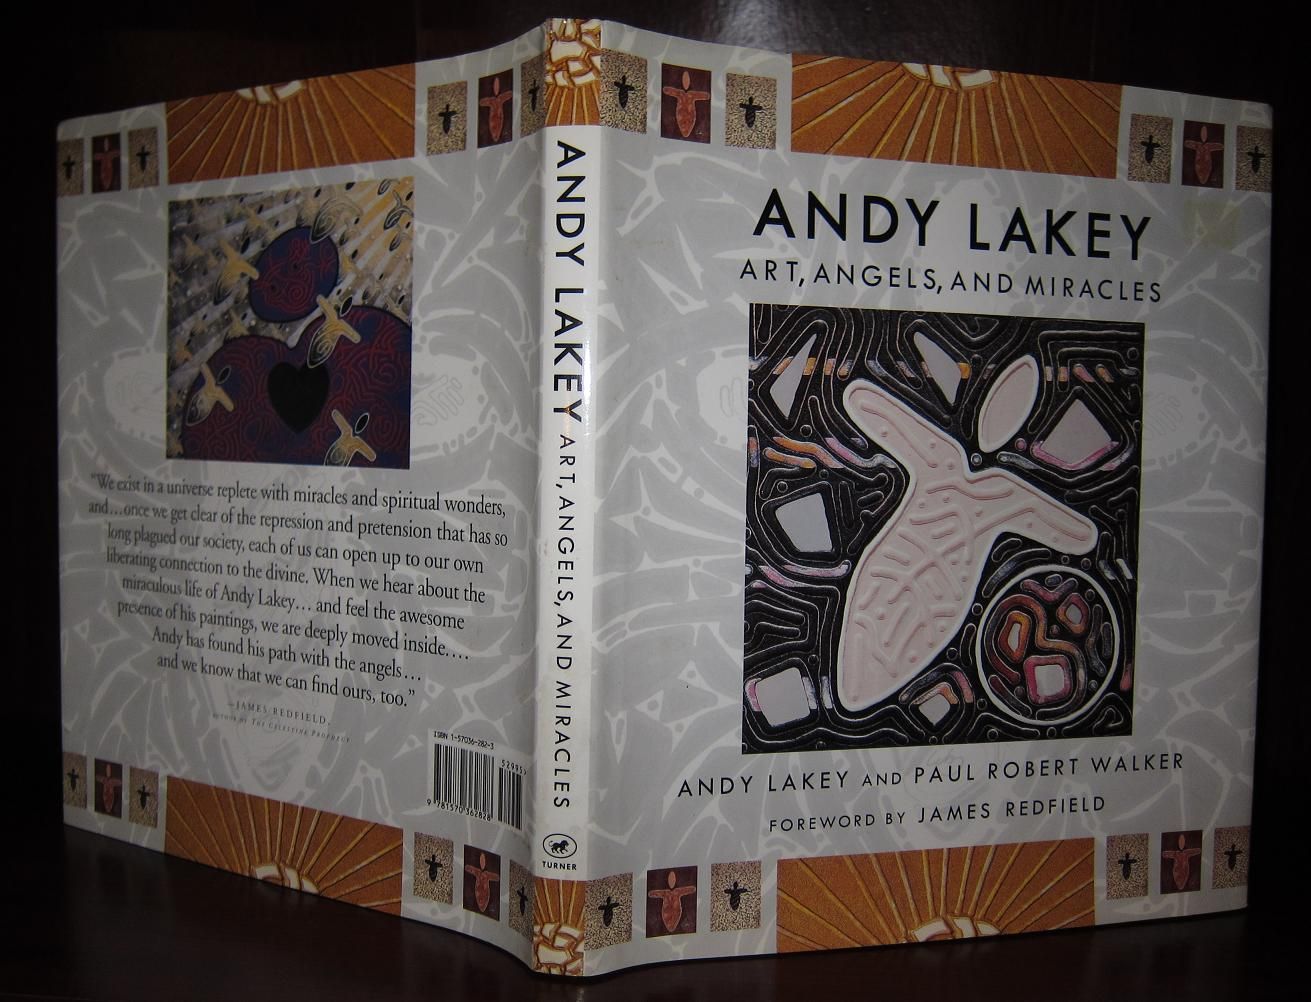 LAKEY, ANDY AND WALKER, PAUL ROBERT - Andy Lakey: Art, Angels, and Miracles